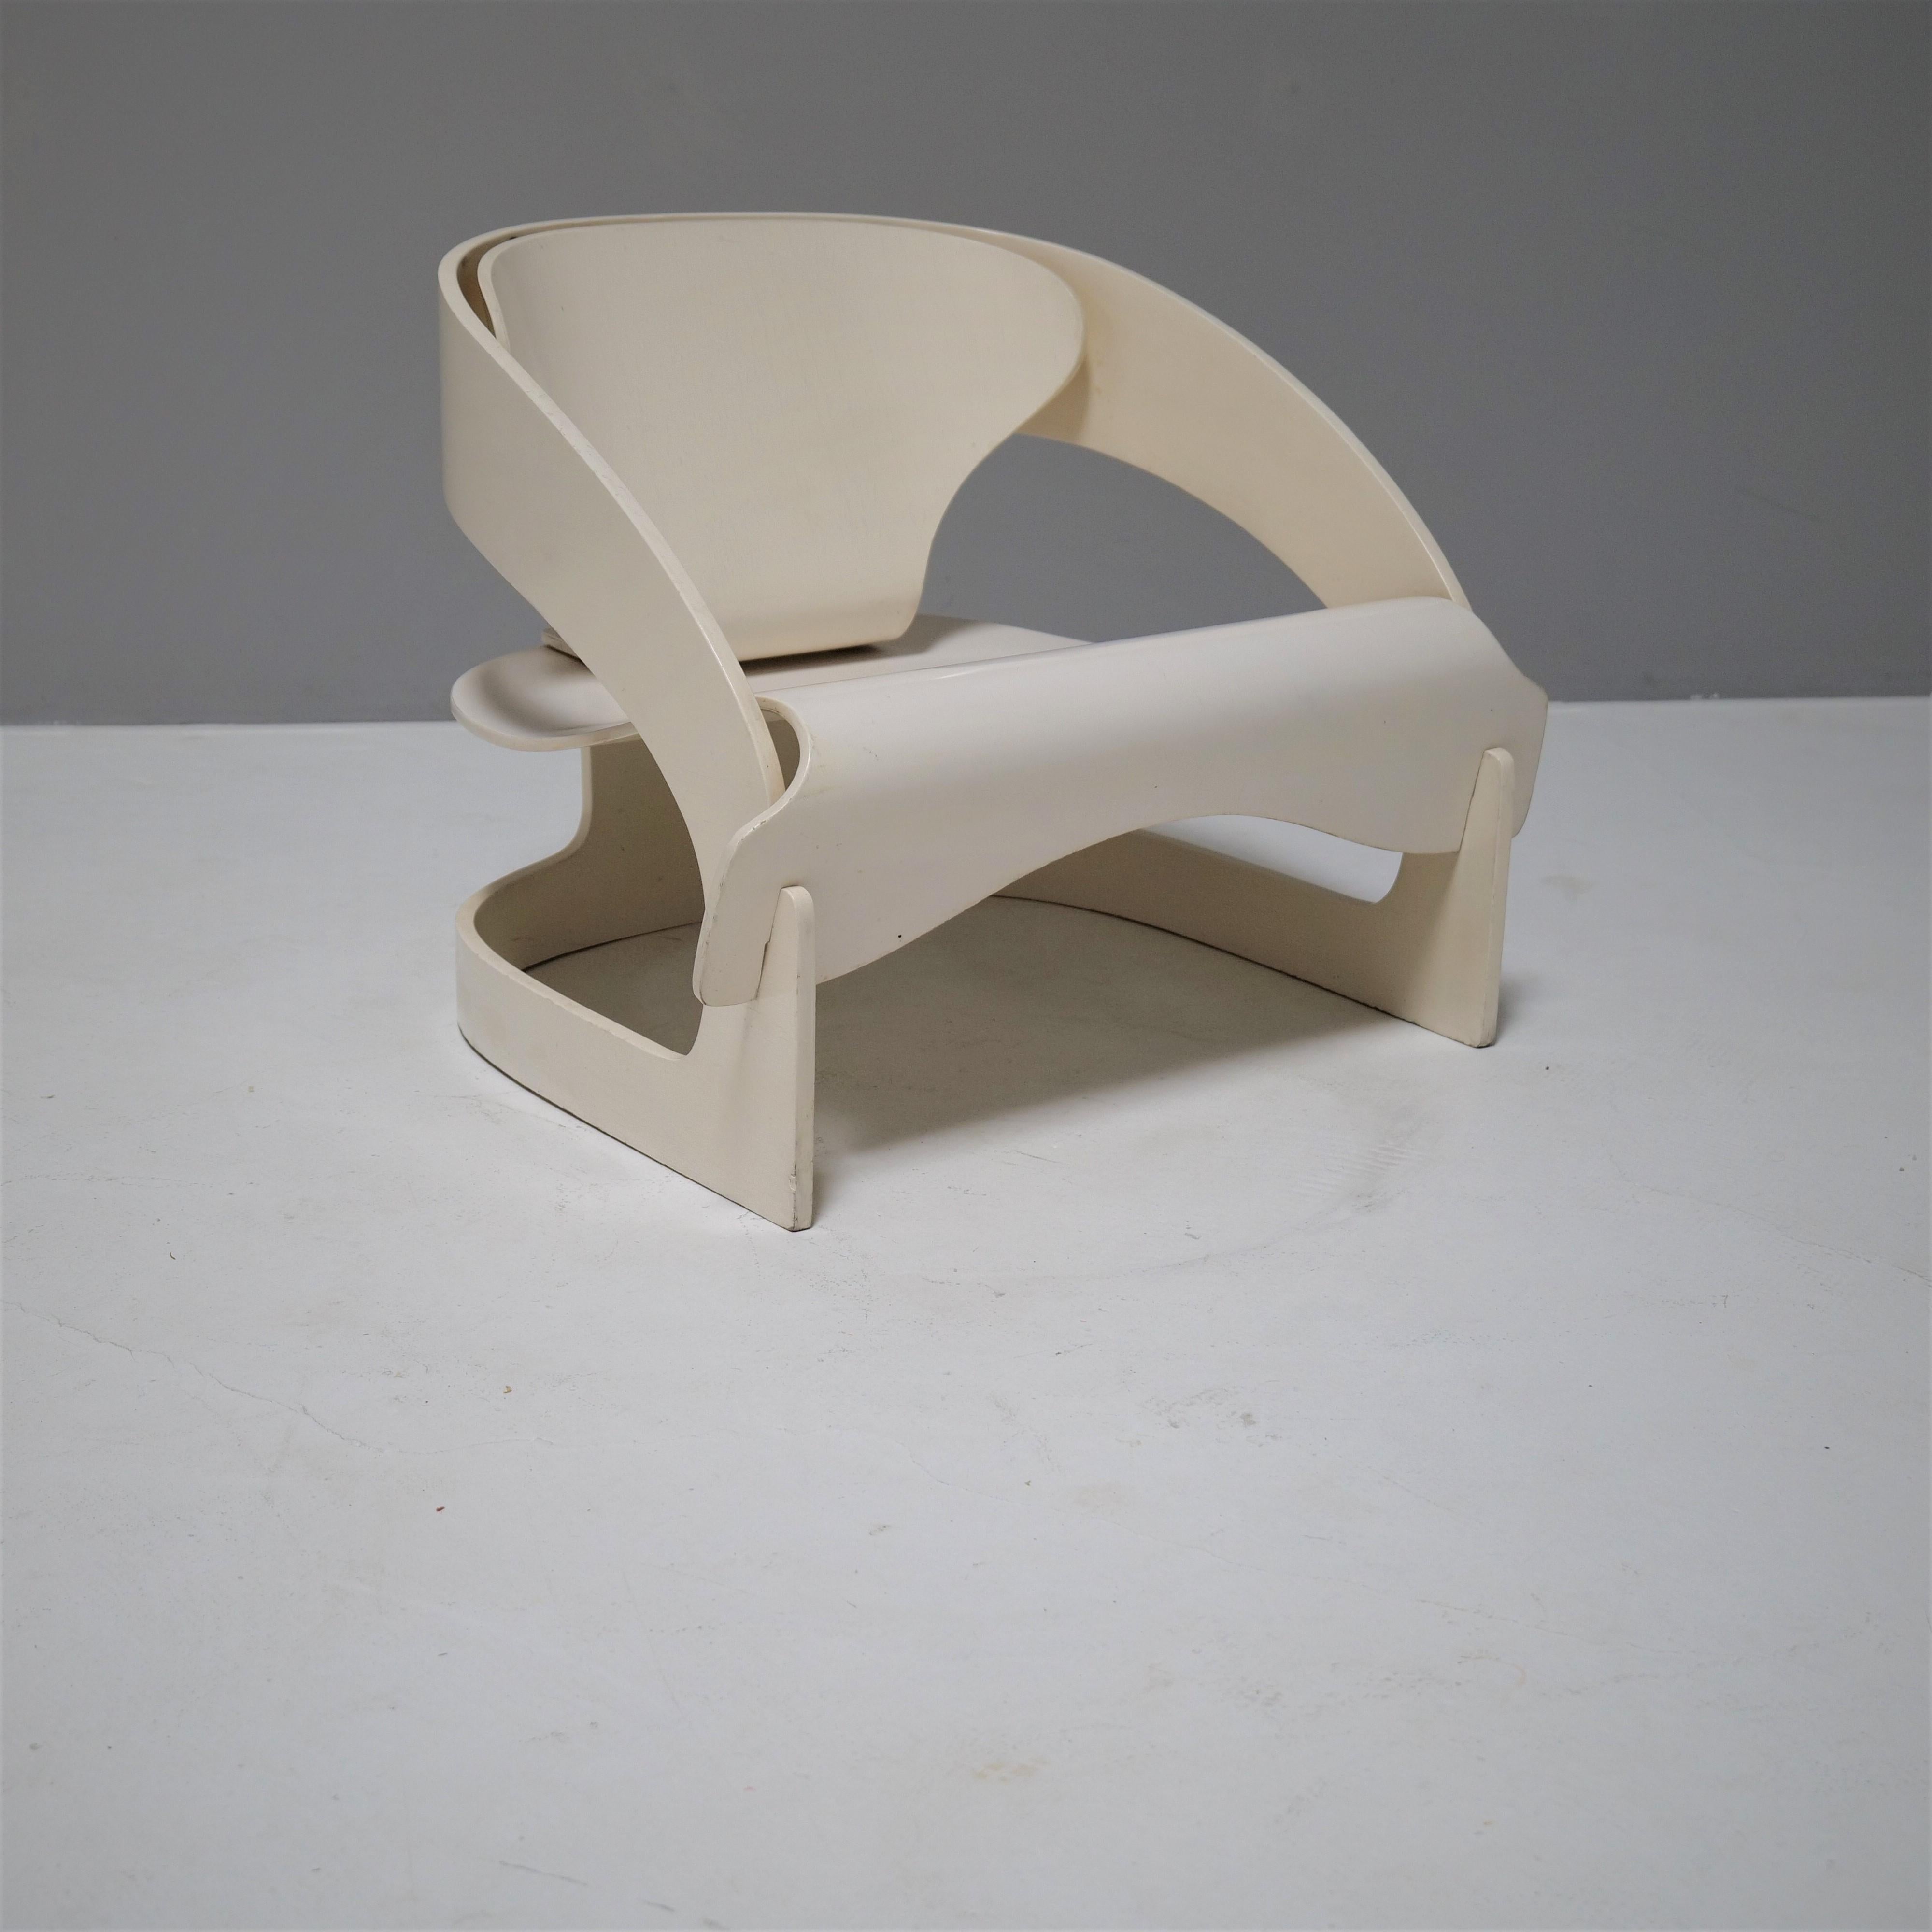 Plywood Joe Colombo, armchair mod. 4801 for Kartell, 1963